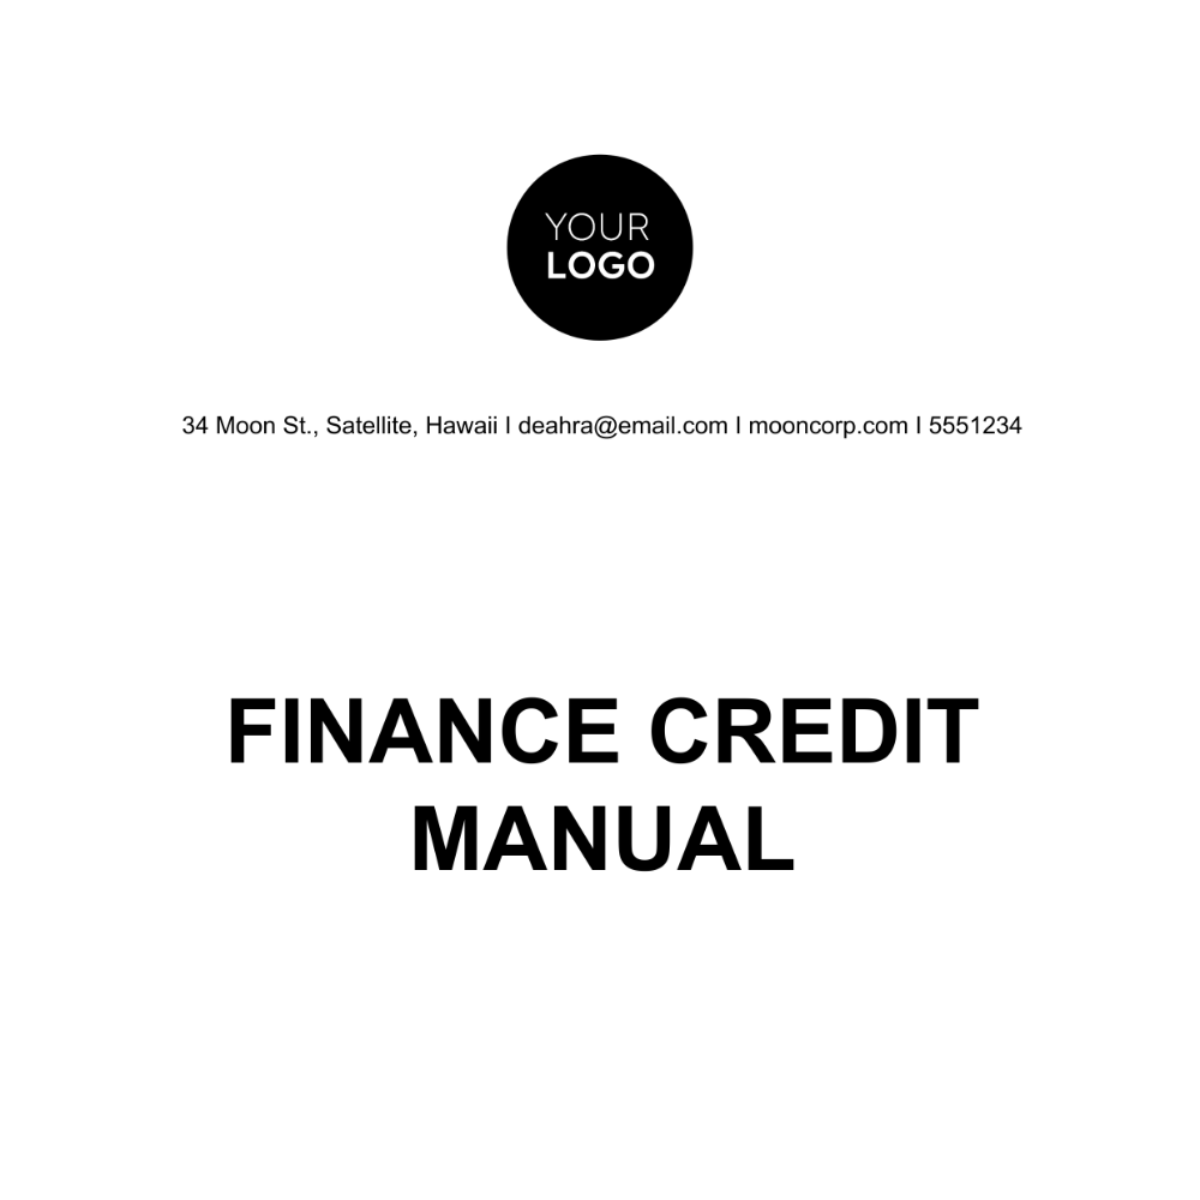 Finance Credit Manual Template